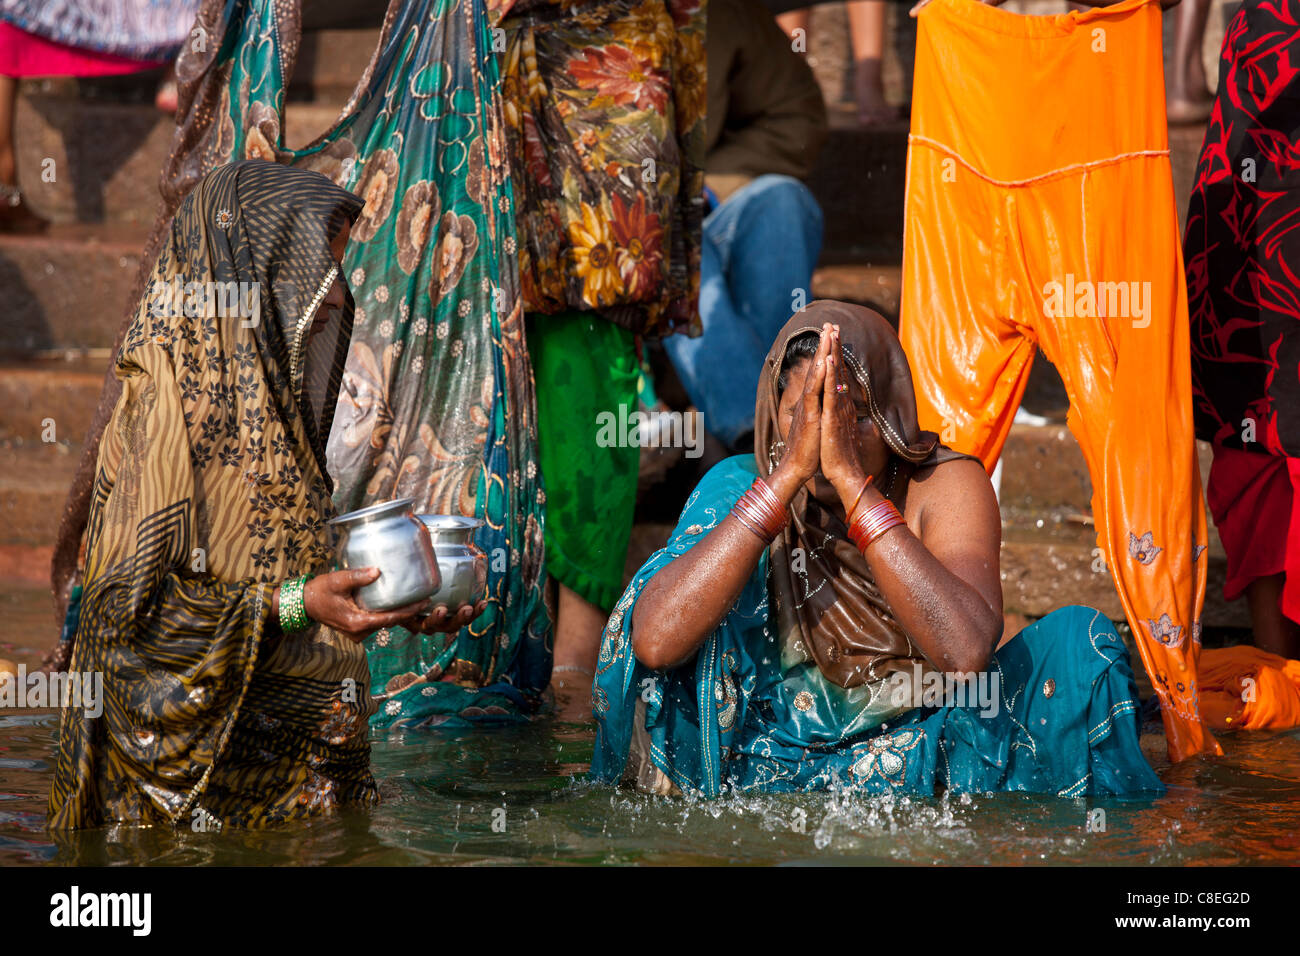 Indian Hindu Pilgrims Bathing In The Ganges River At Dashashwamedh Ghat In Holy City Of Varanasi